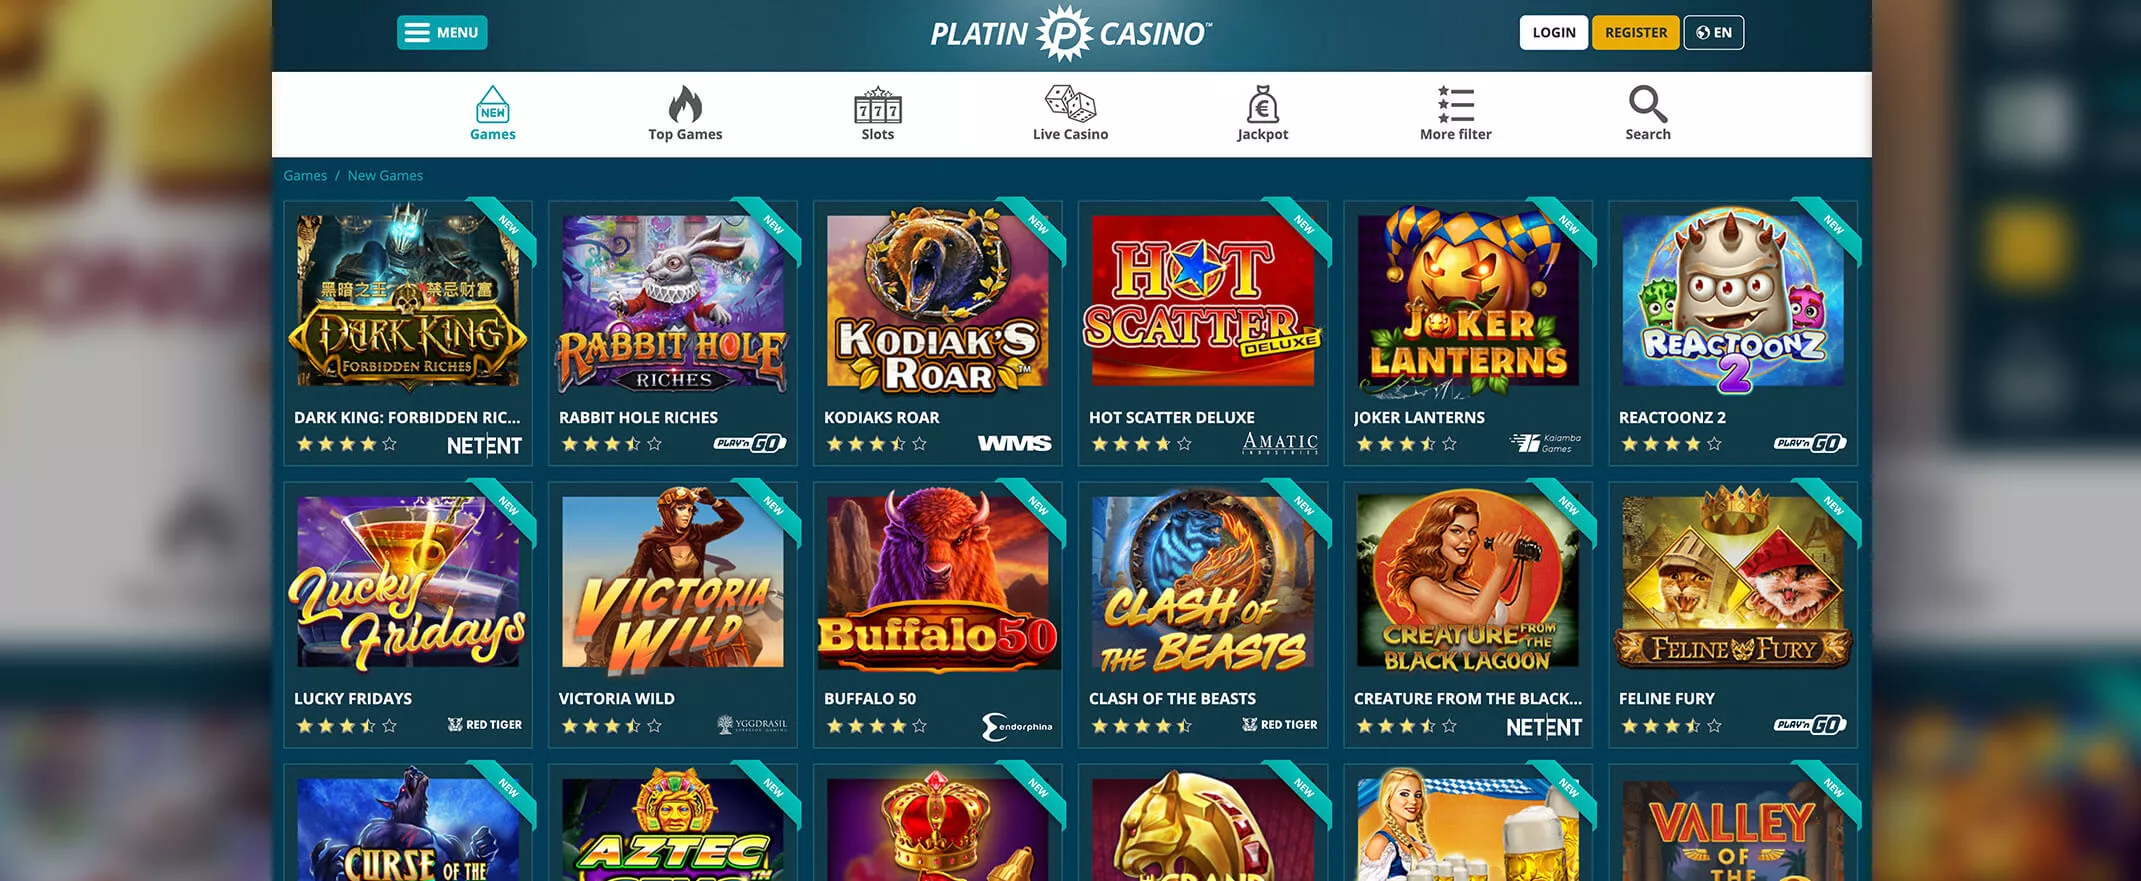 Platin casino games screenshot